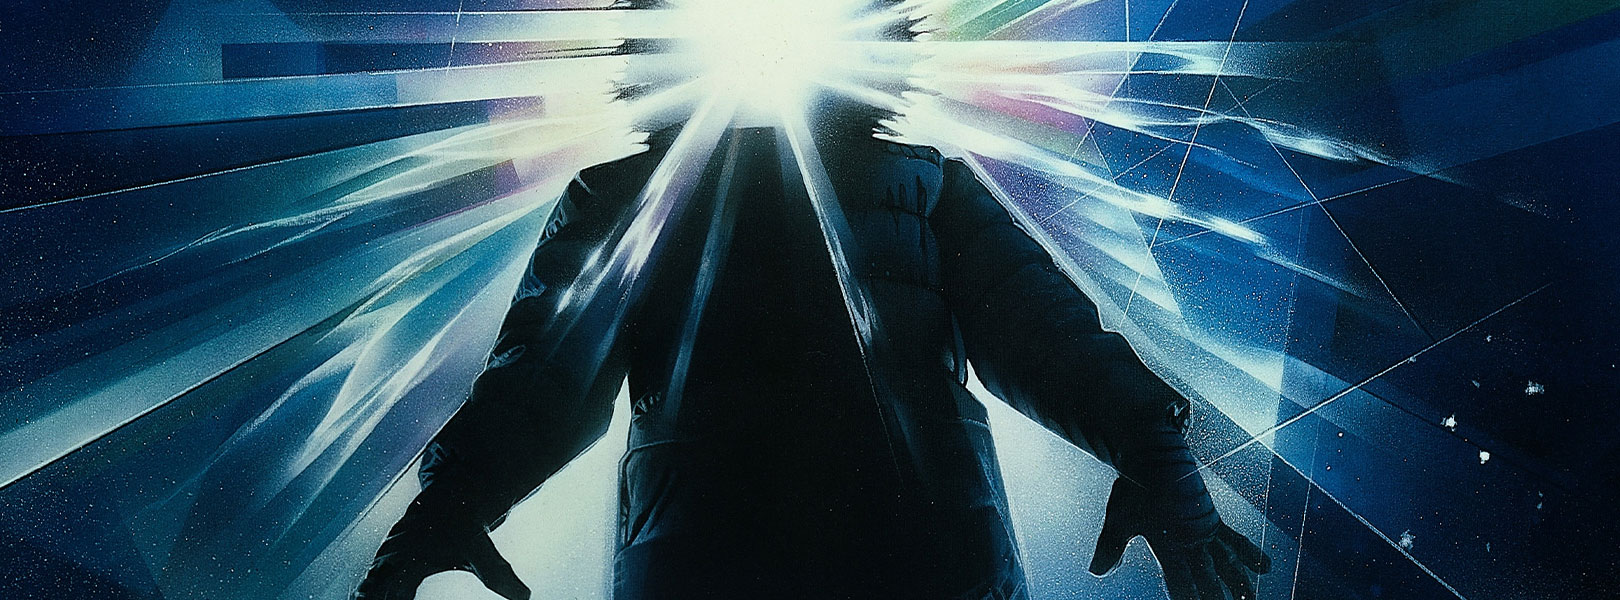 Afiche de la película "The Thing" (John Carpenter, 1982).